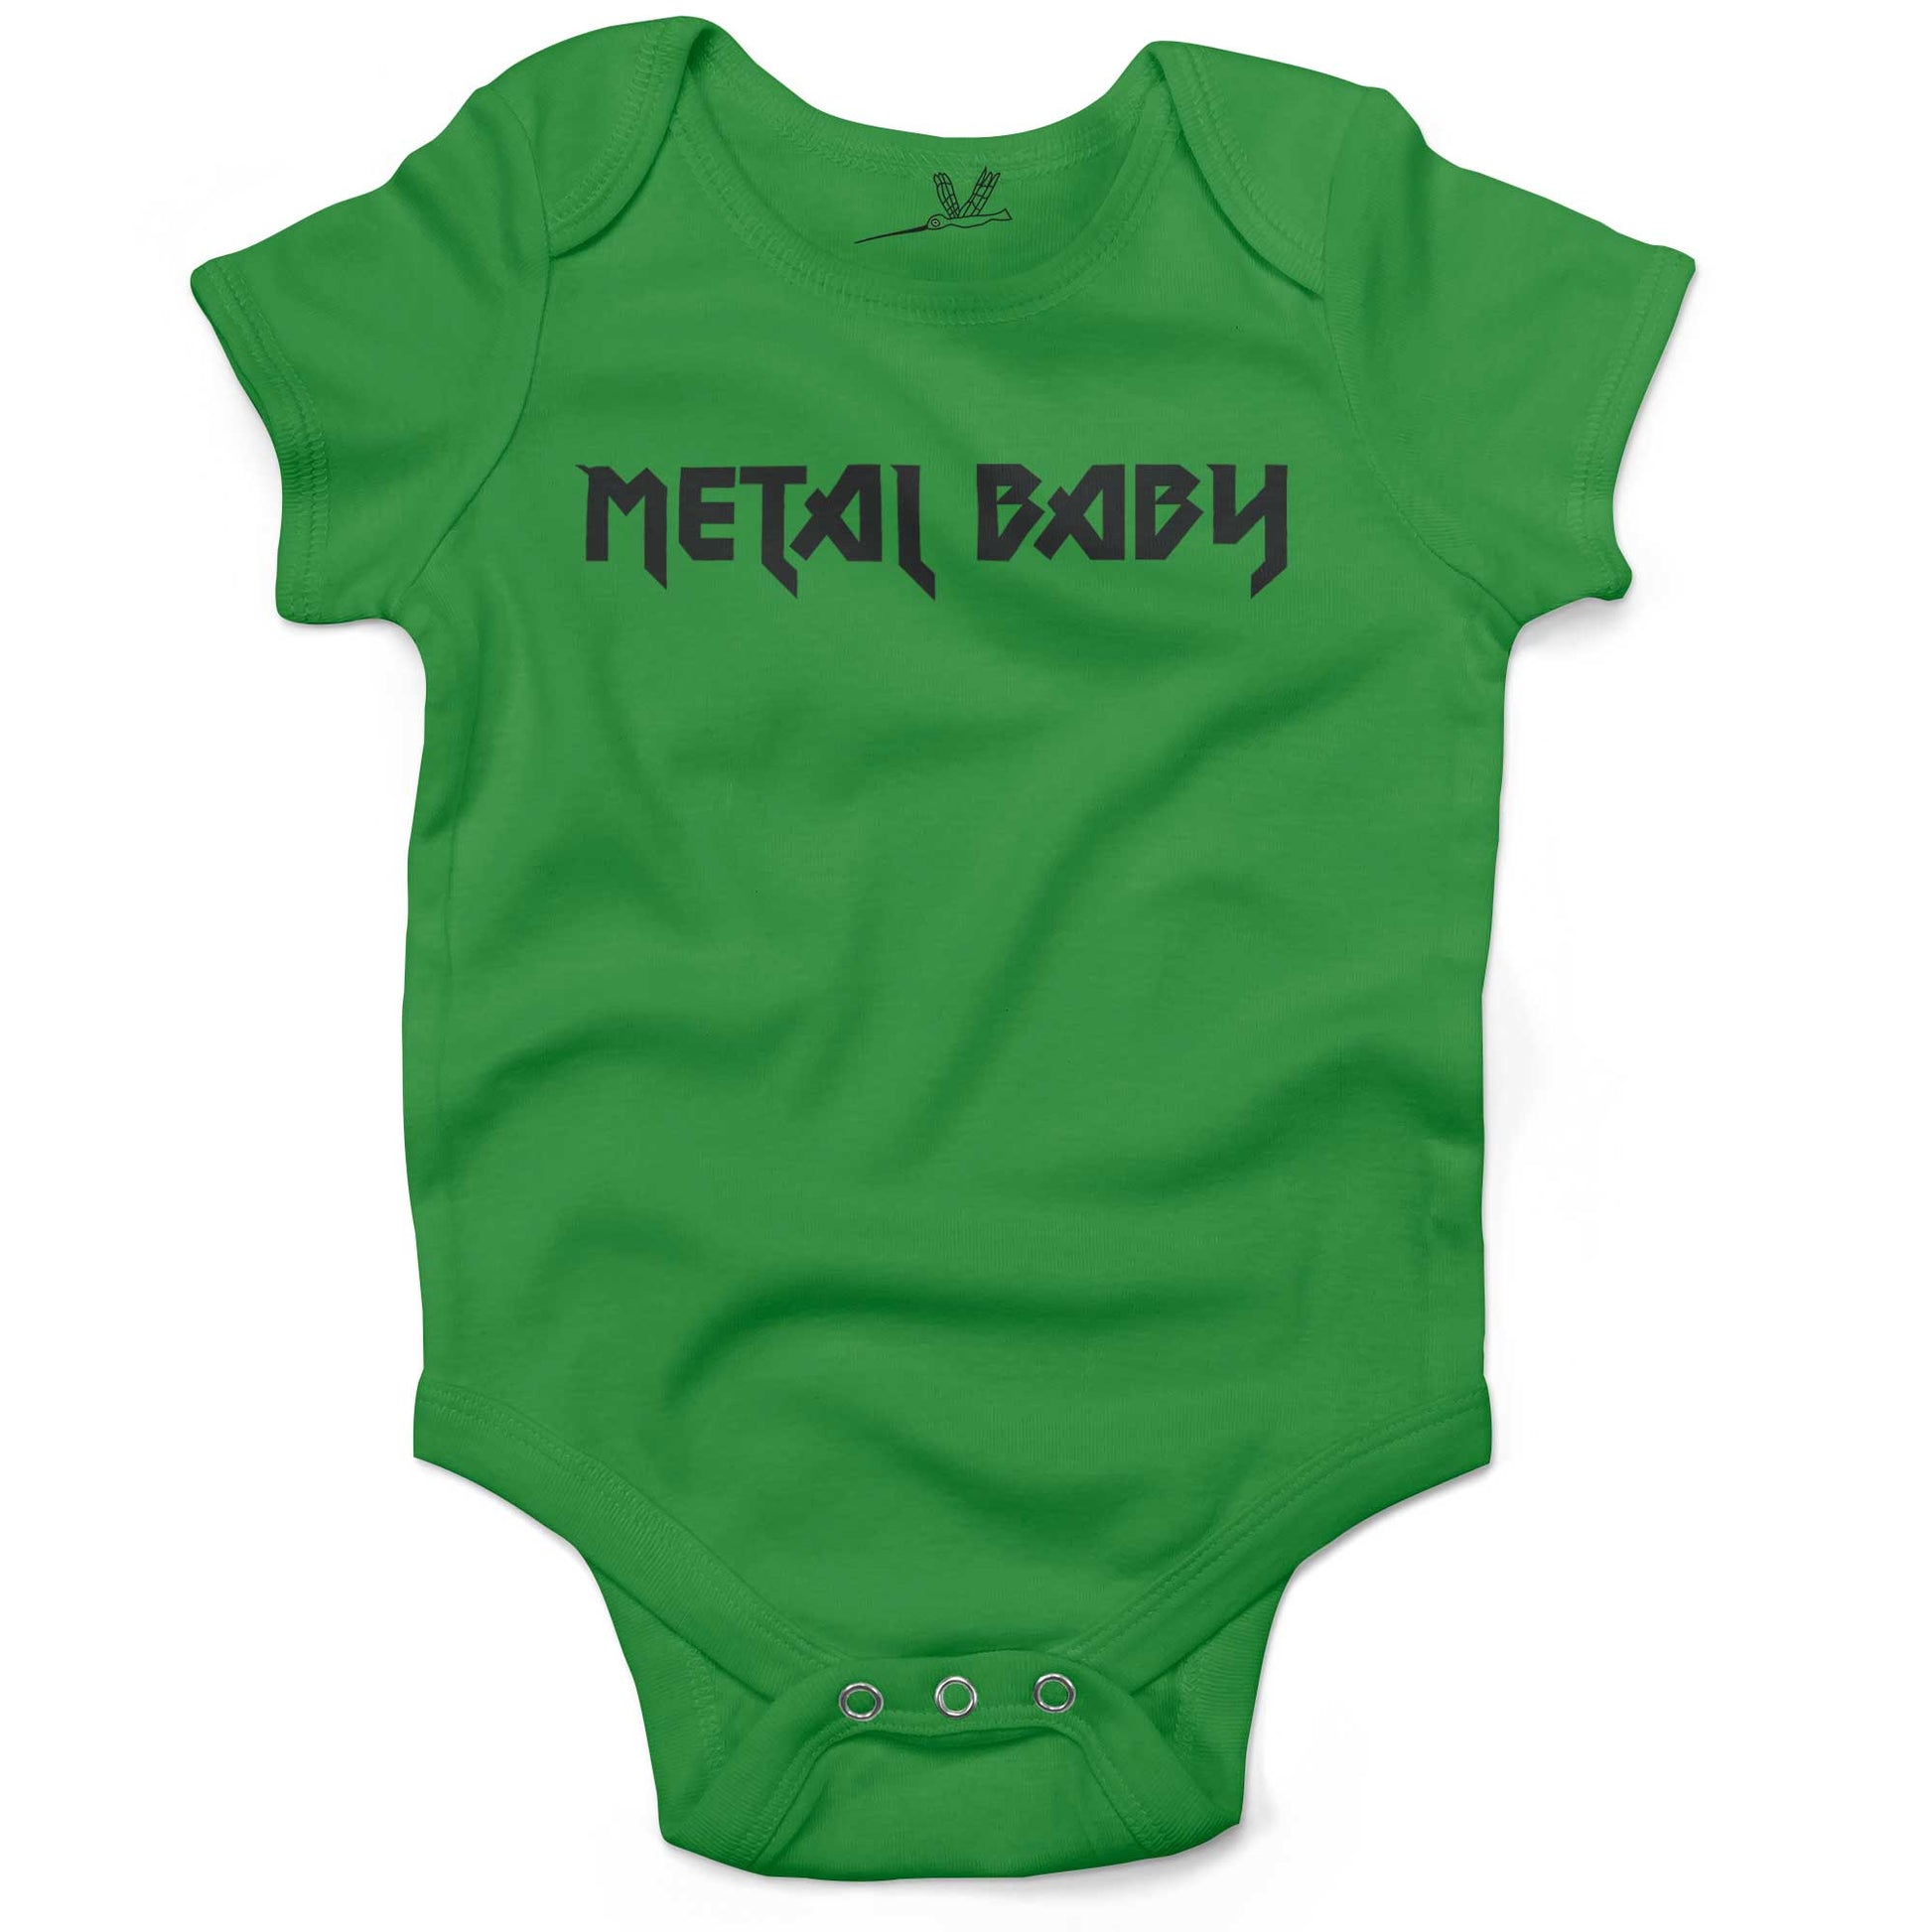 Metal Baby Infant Bodysuit or Raglan Baby Tee-Grass Green-3-6 months